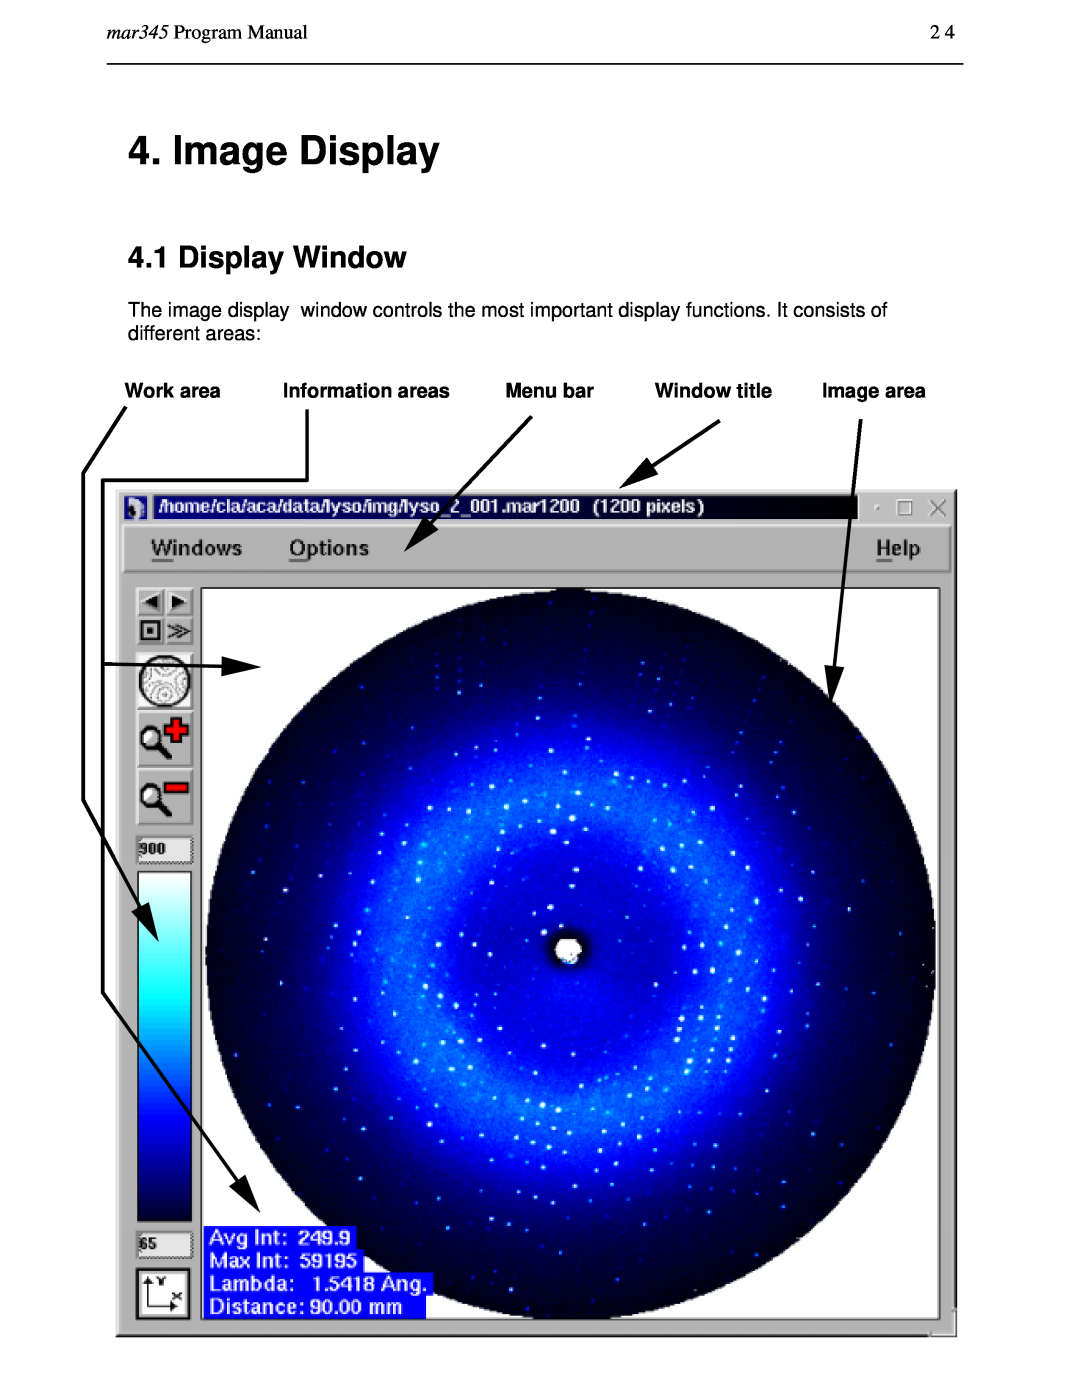 Compaq manual Image Display, Display Window, mar345 Program Manual 